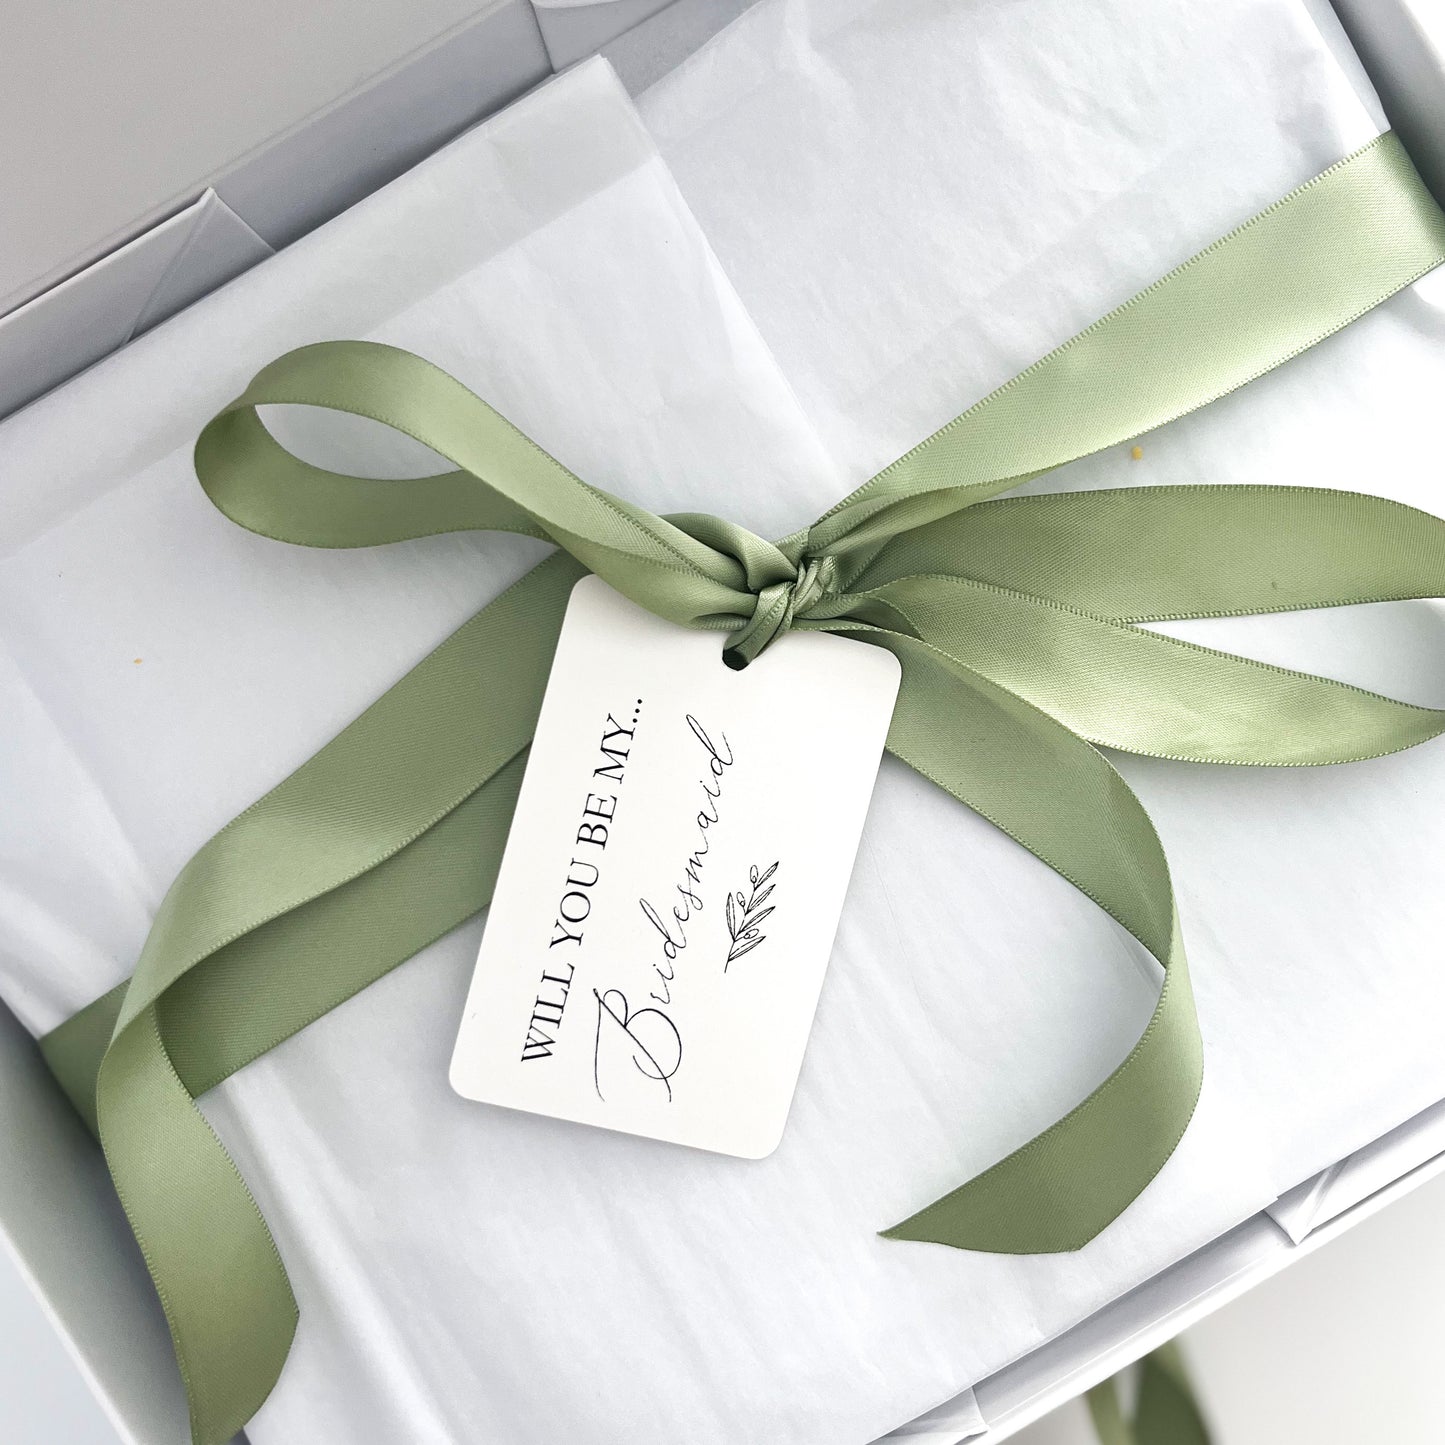 Deluxe Bridesmaid Gift Box